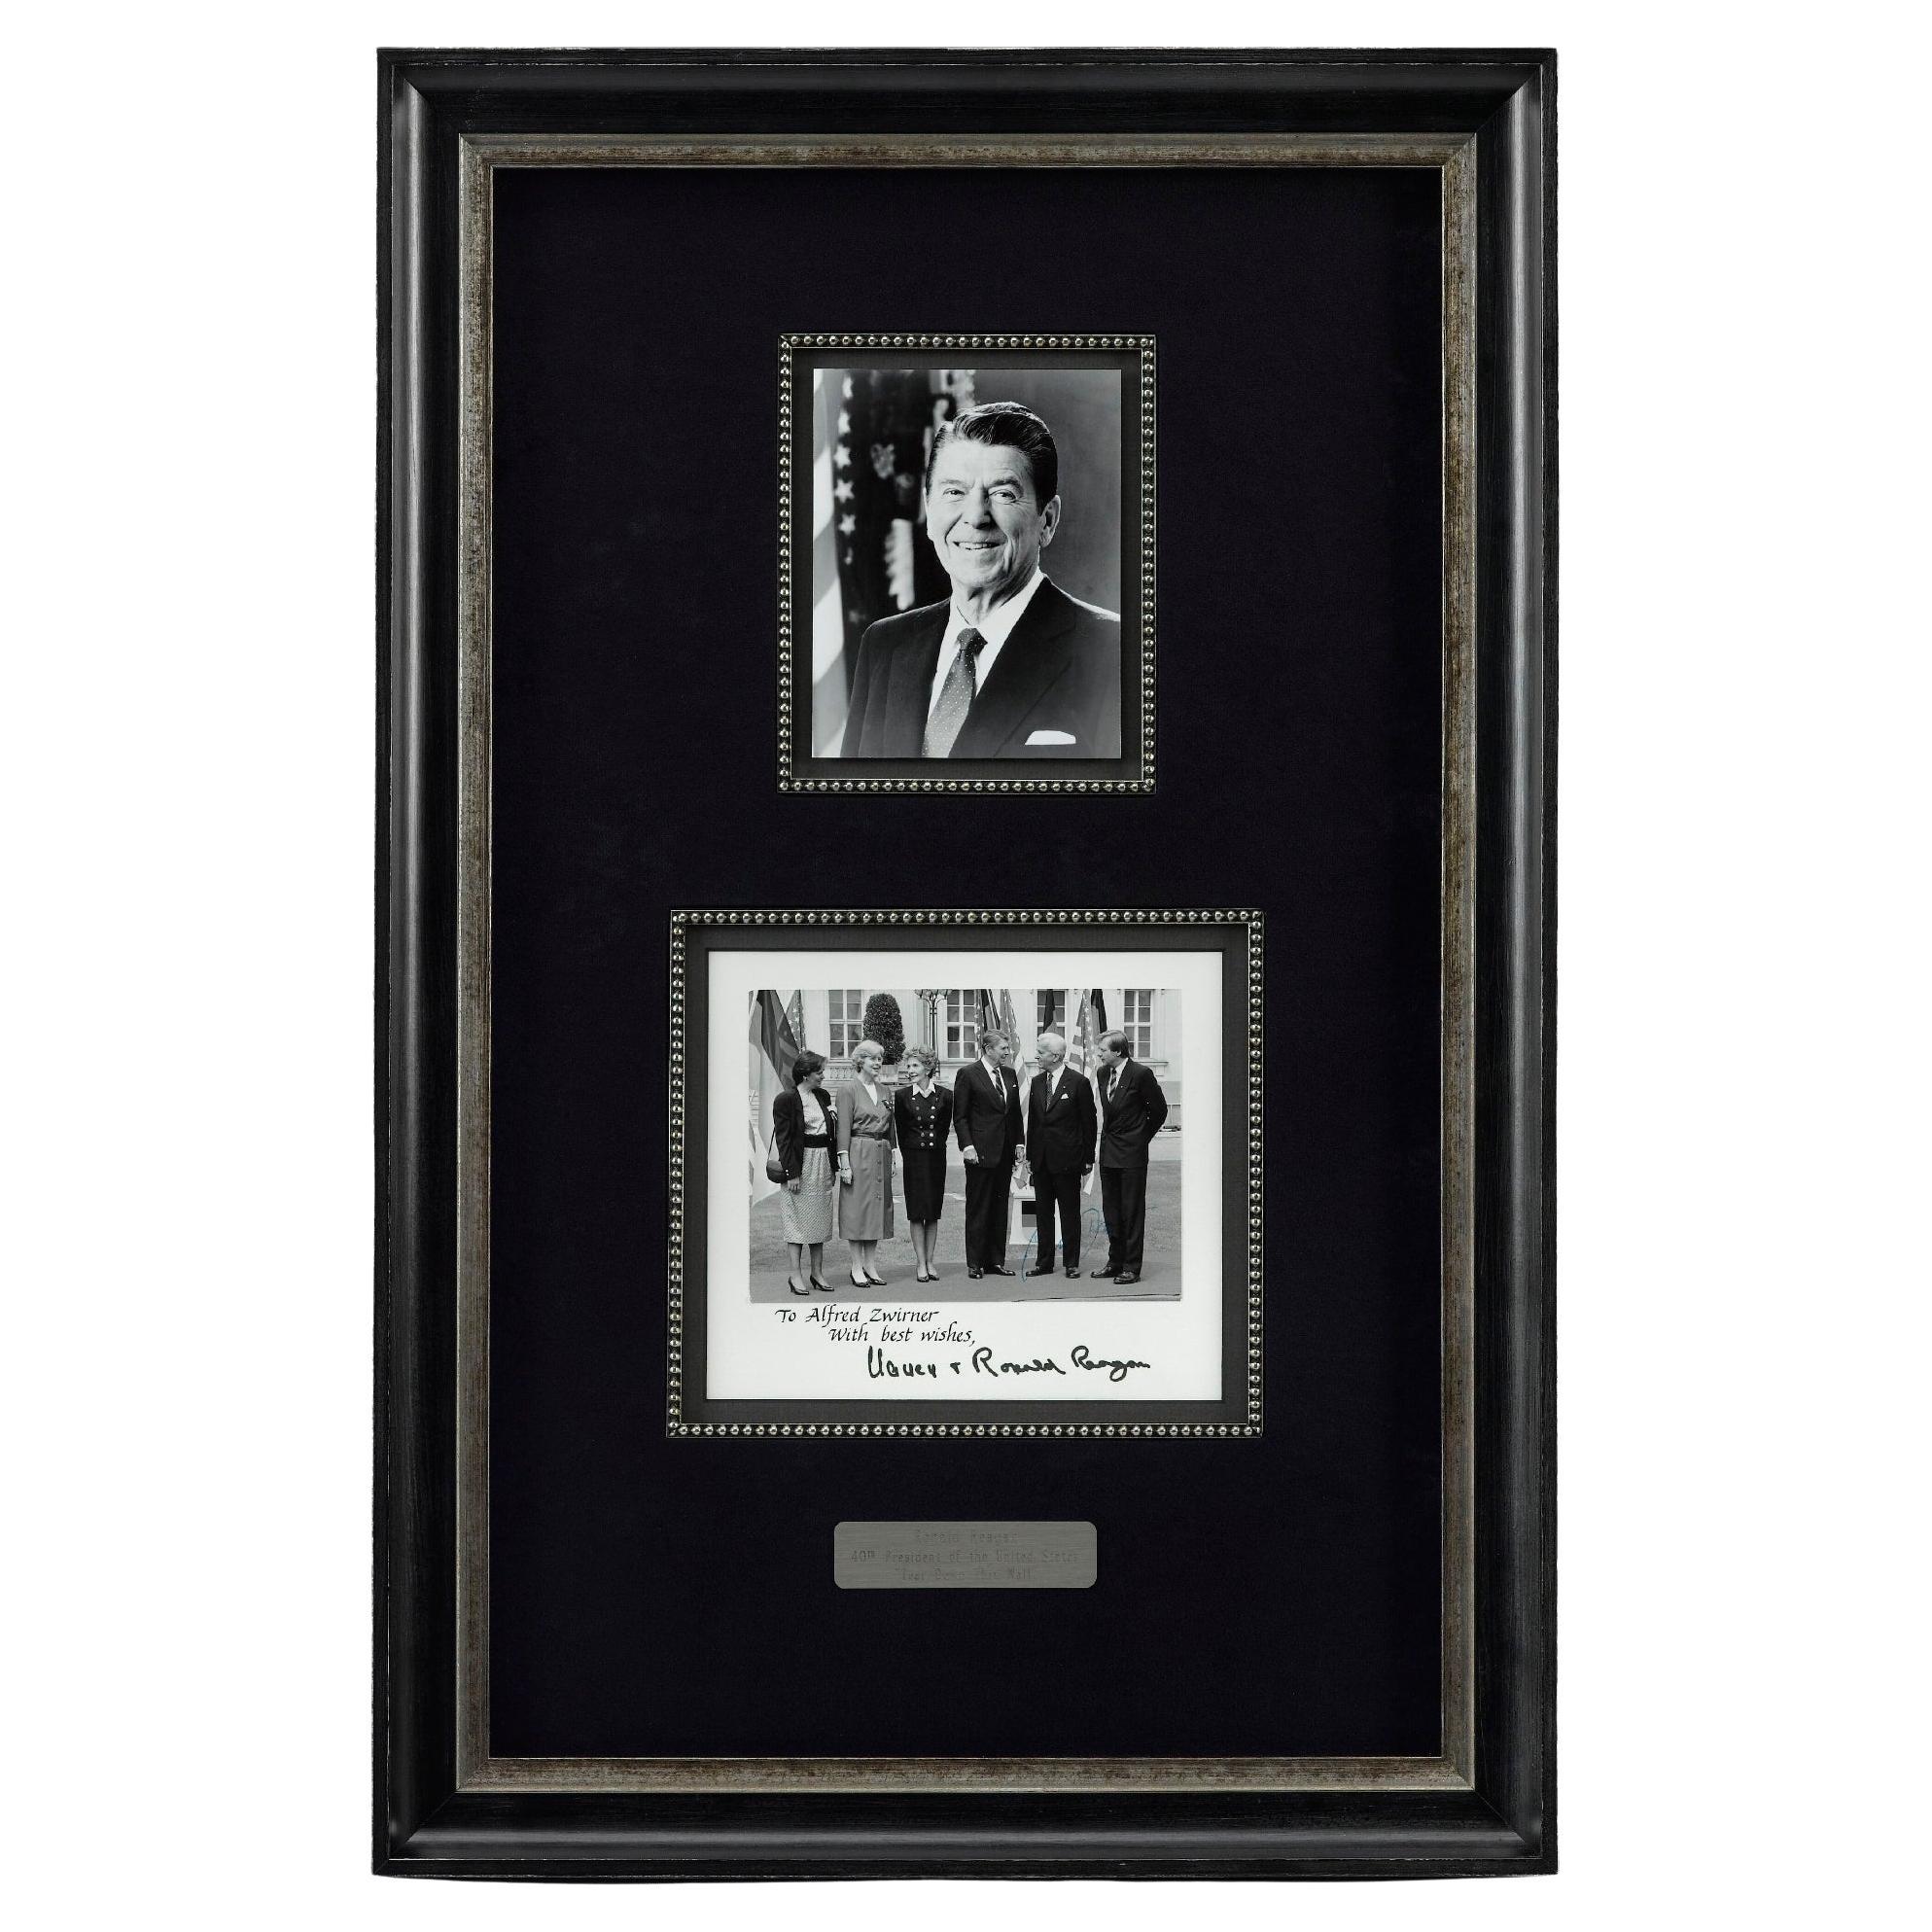 Ronald Reagan, Nancy Reagan, and Eberhard Diepgen Autographed Photograph